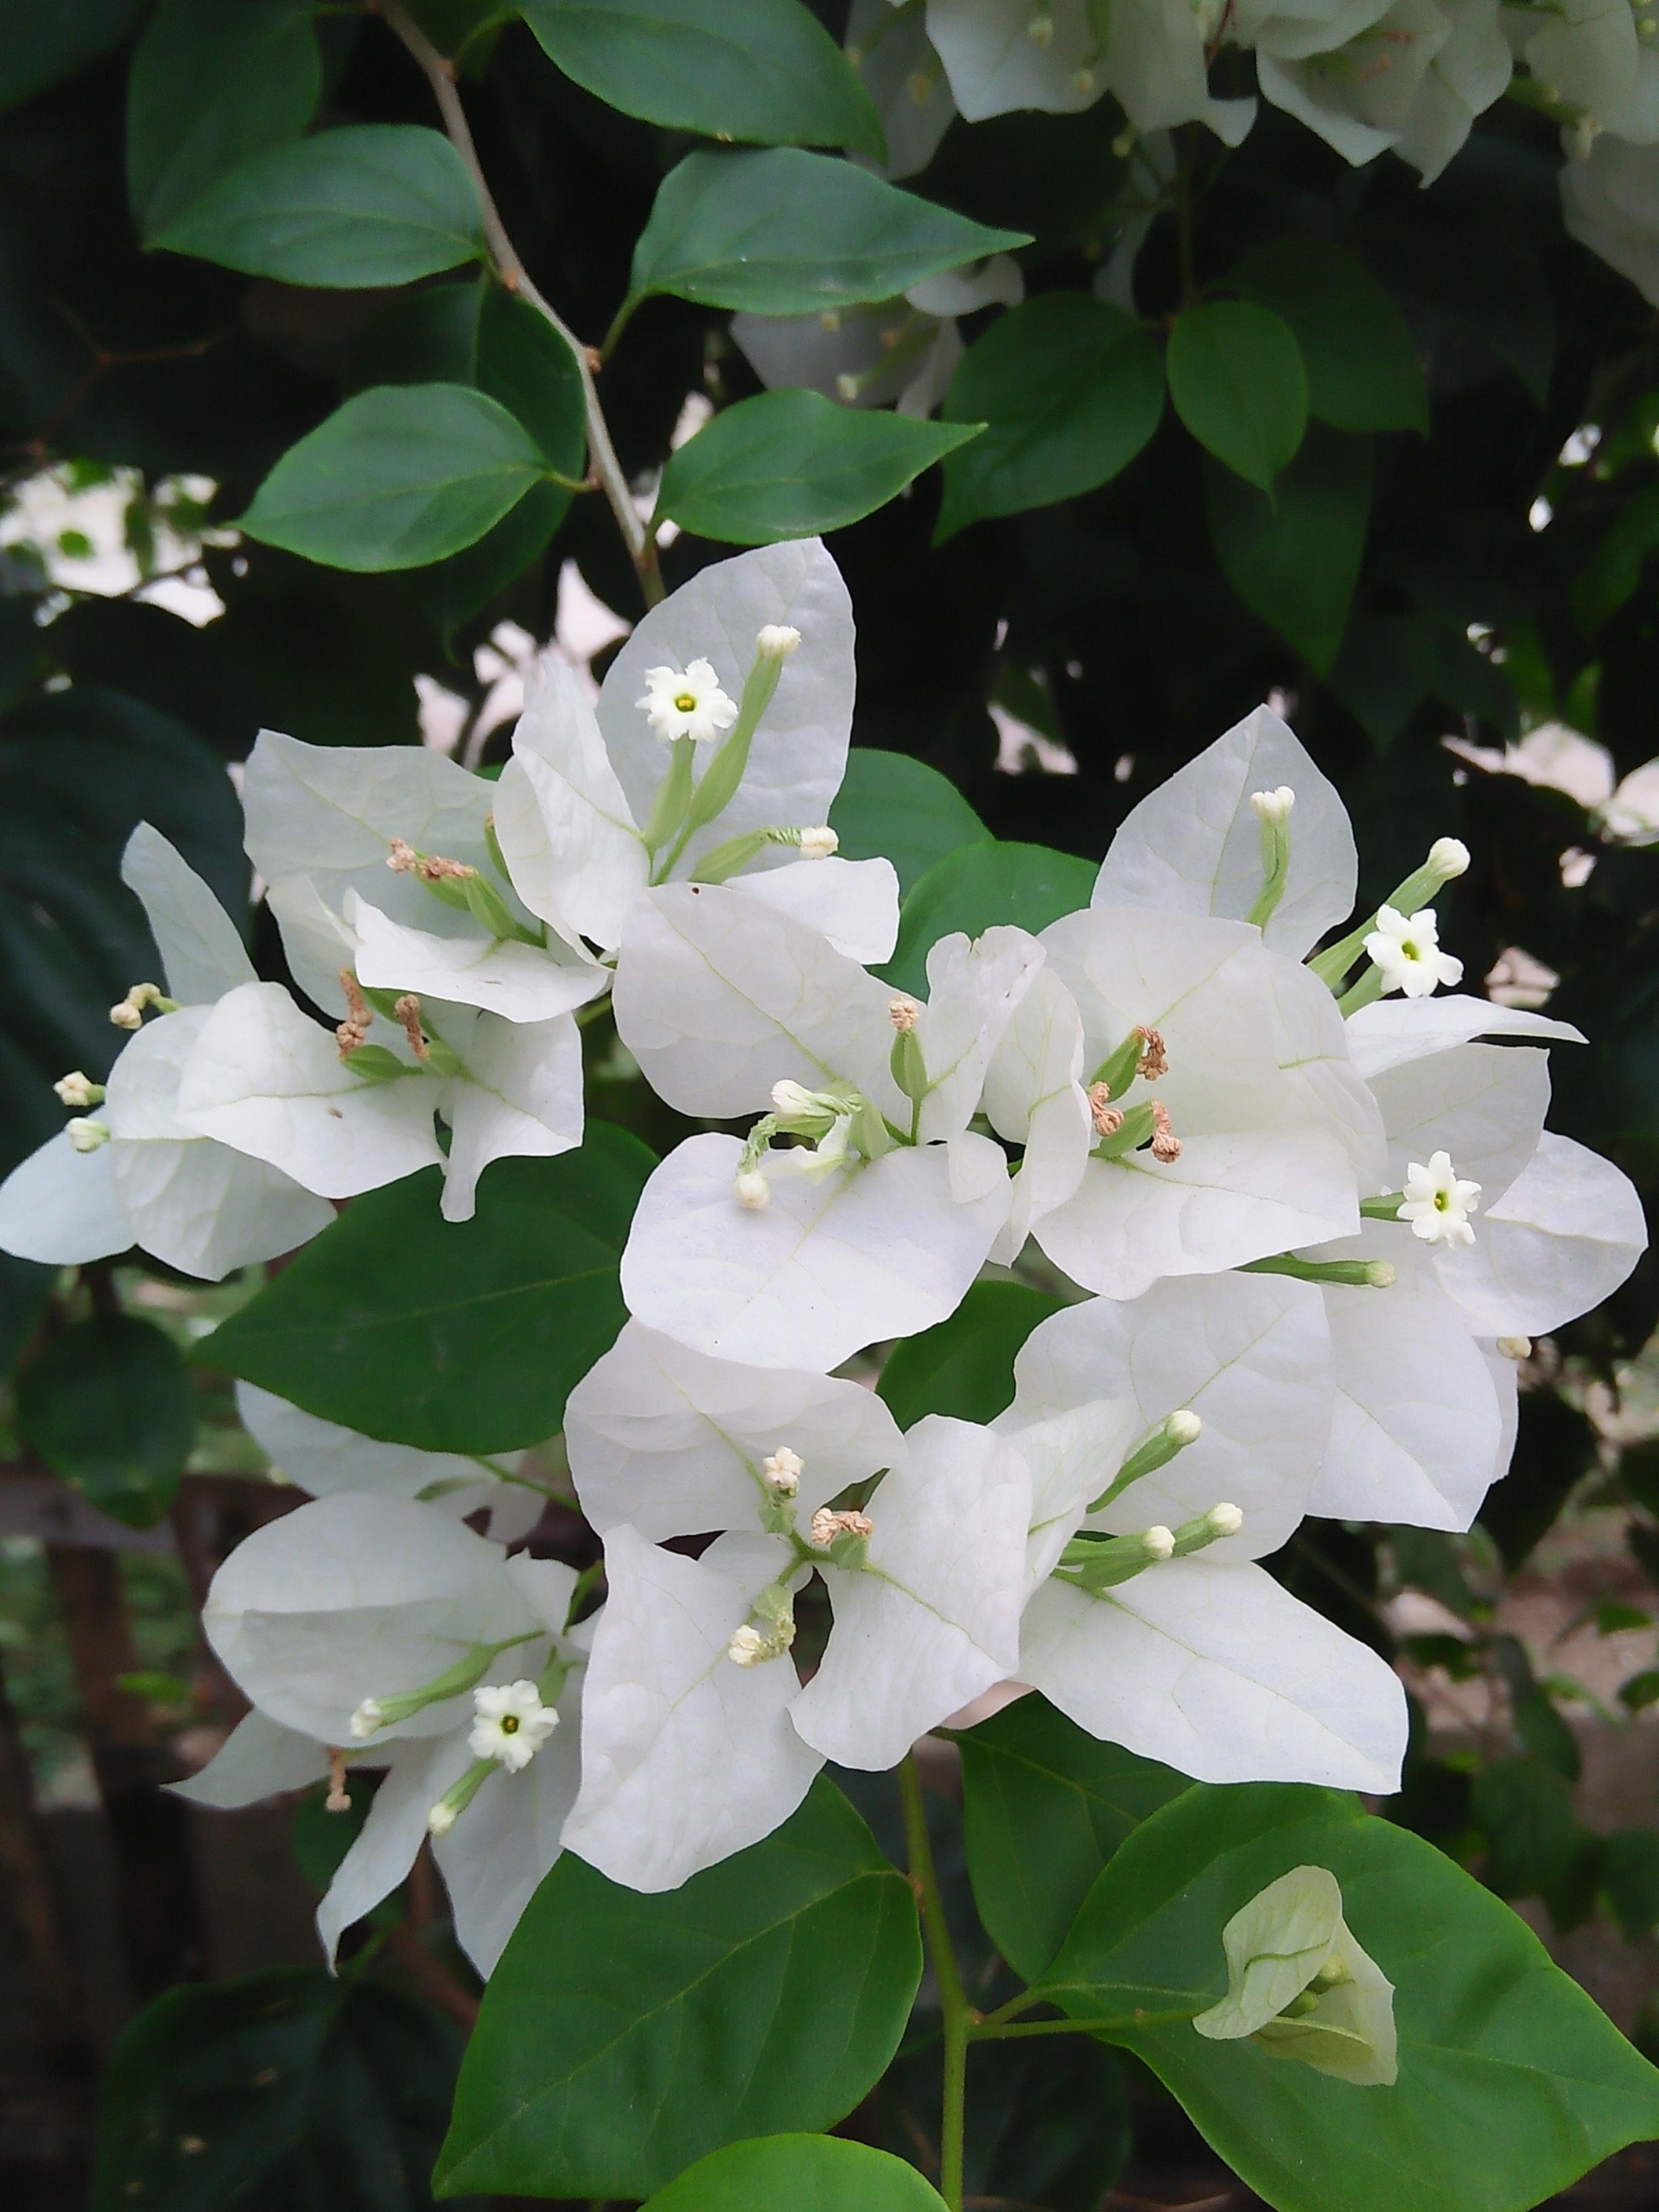  Gambar  Bunga  Putih  Pickini